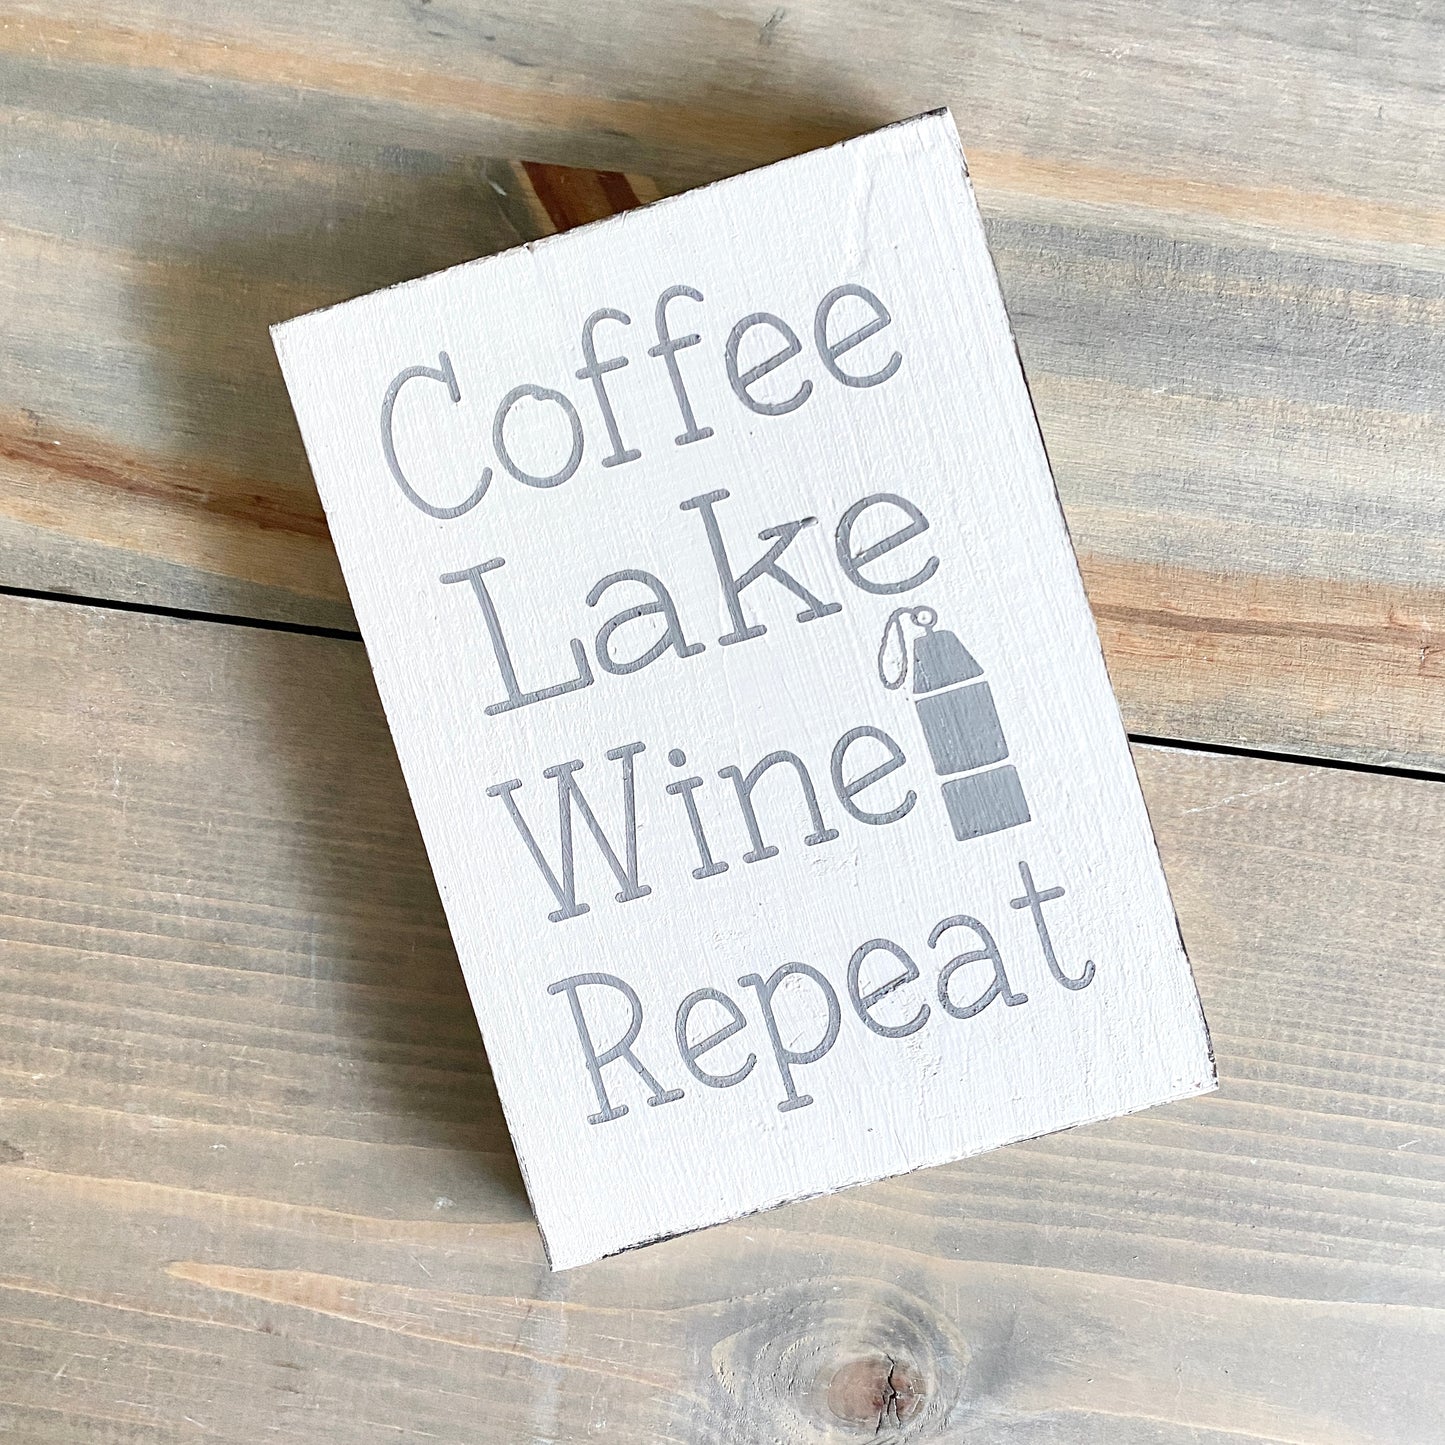 Coffee Lake Wine Repeat Sign